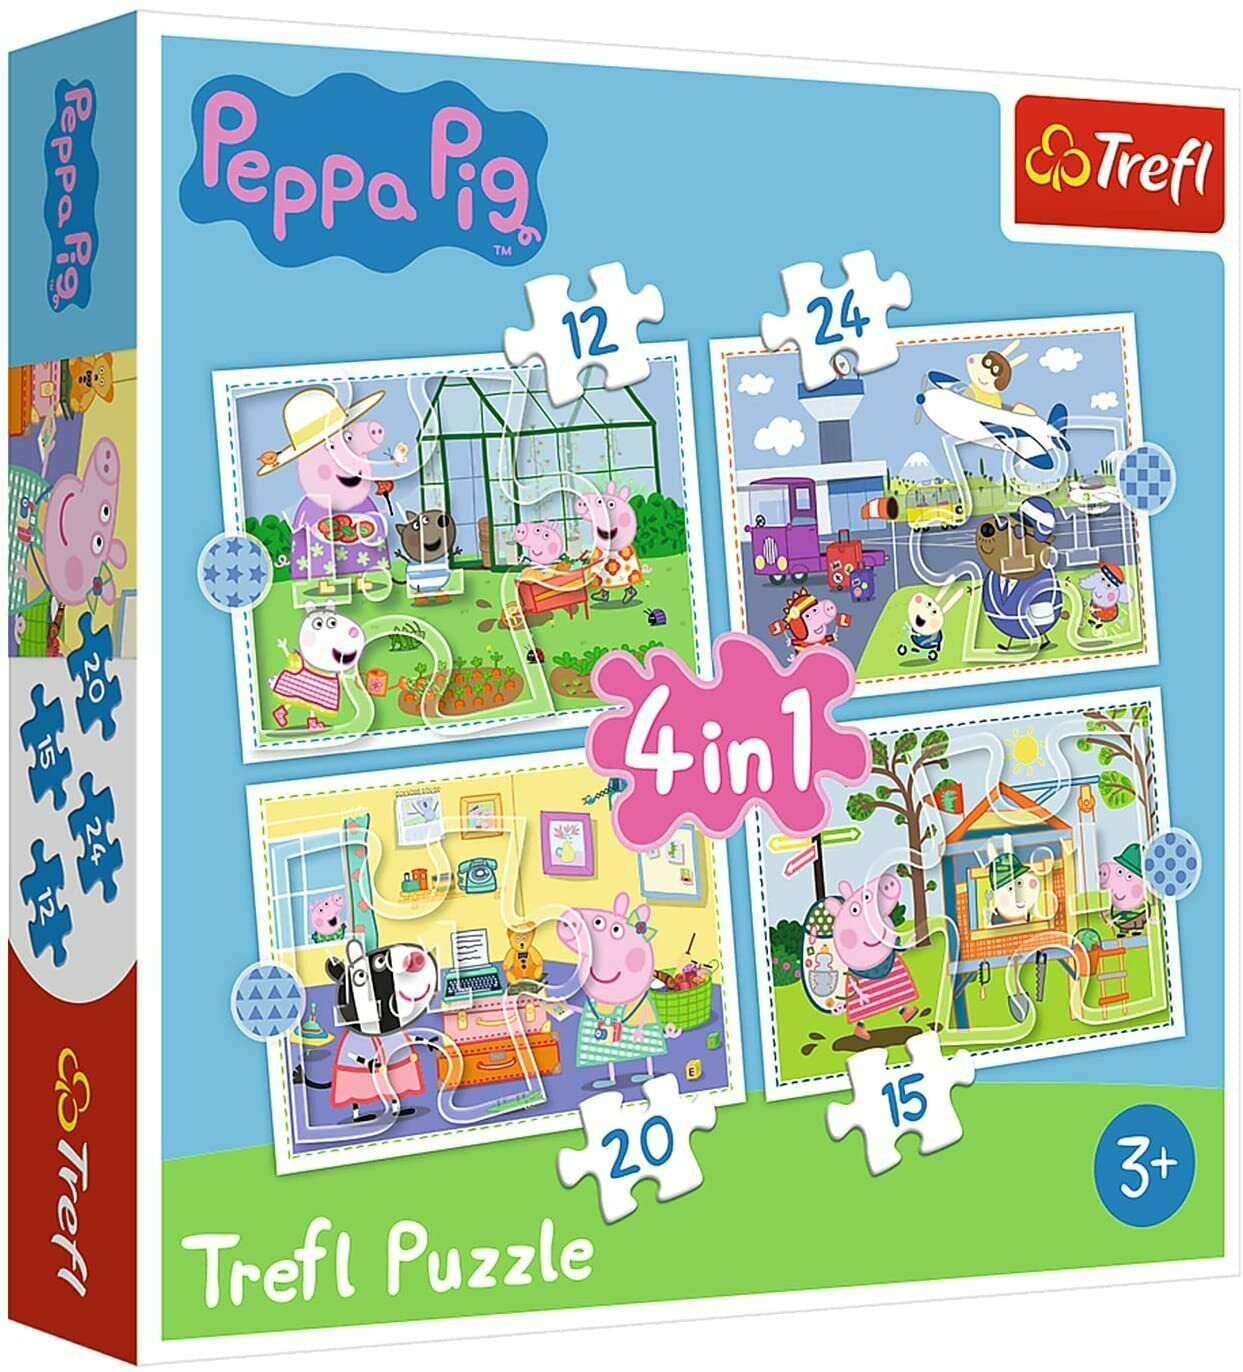 Pig Peppa 1 4 Puzzle in TREFL